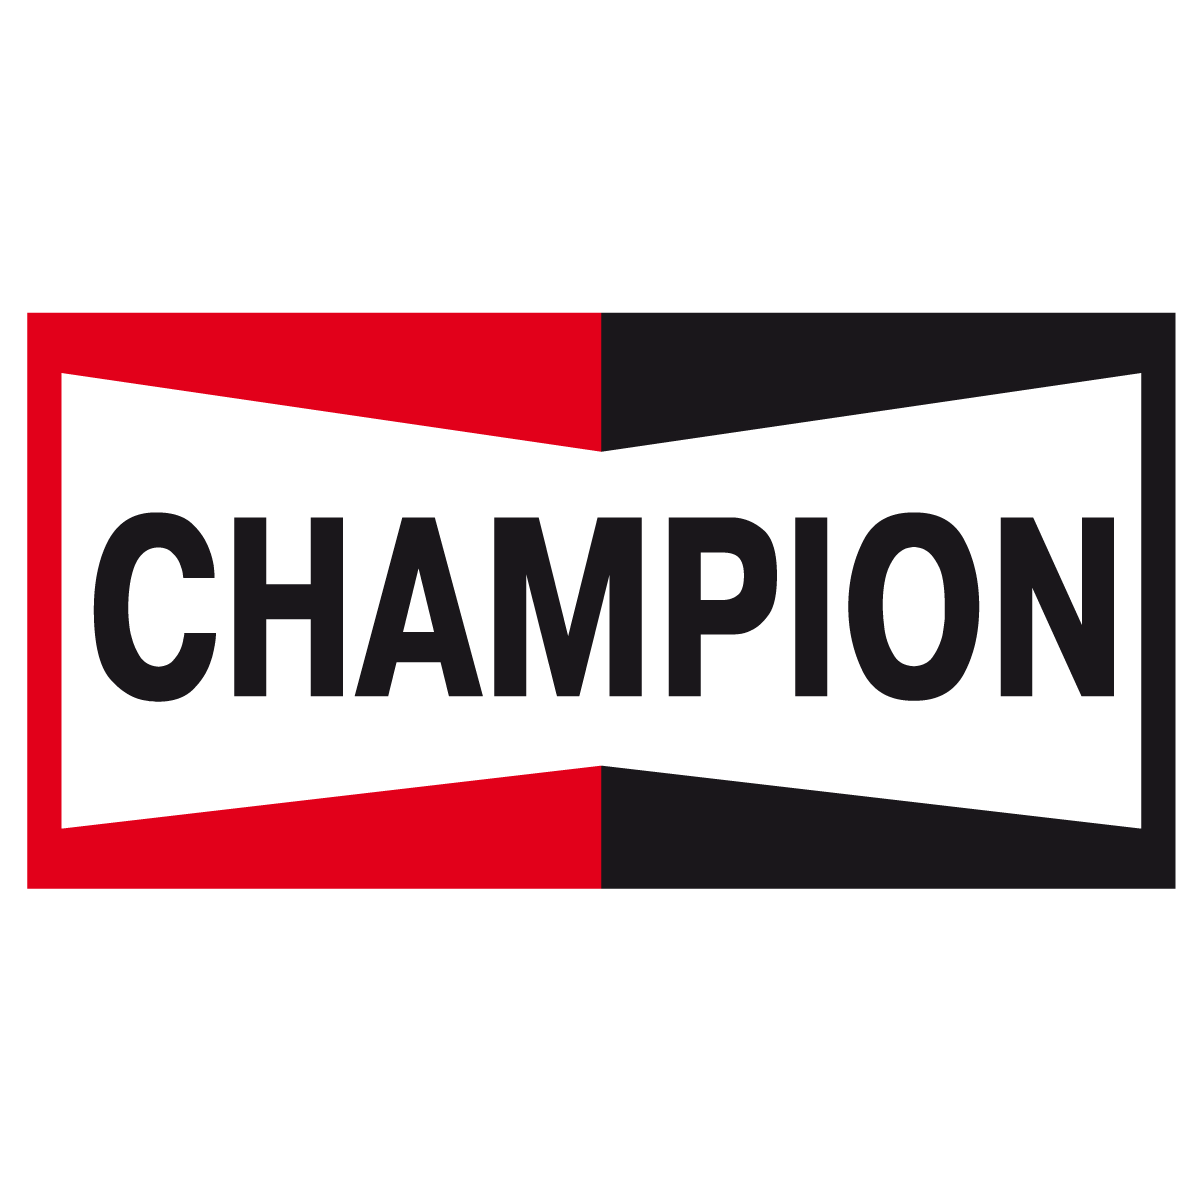 Car & Motorbike Stickers: Champion Motor